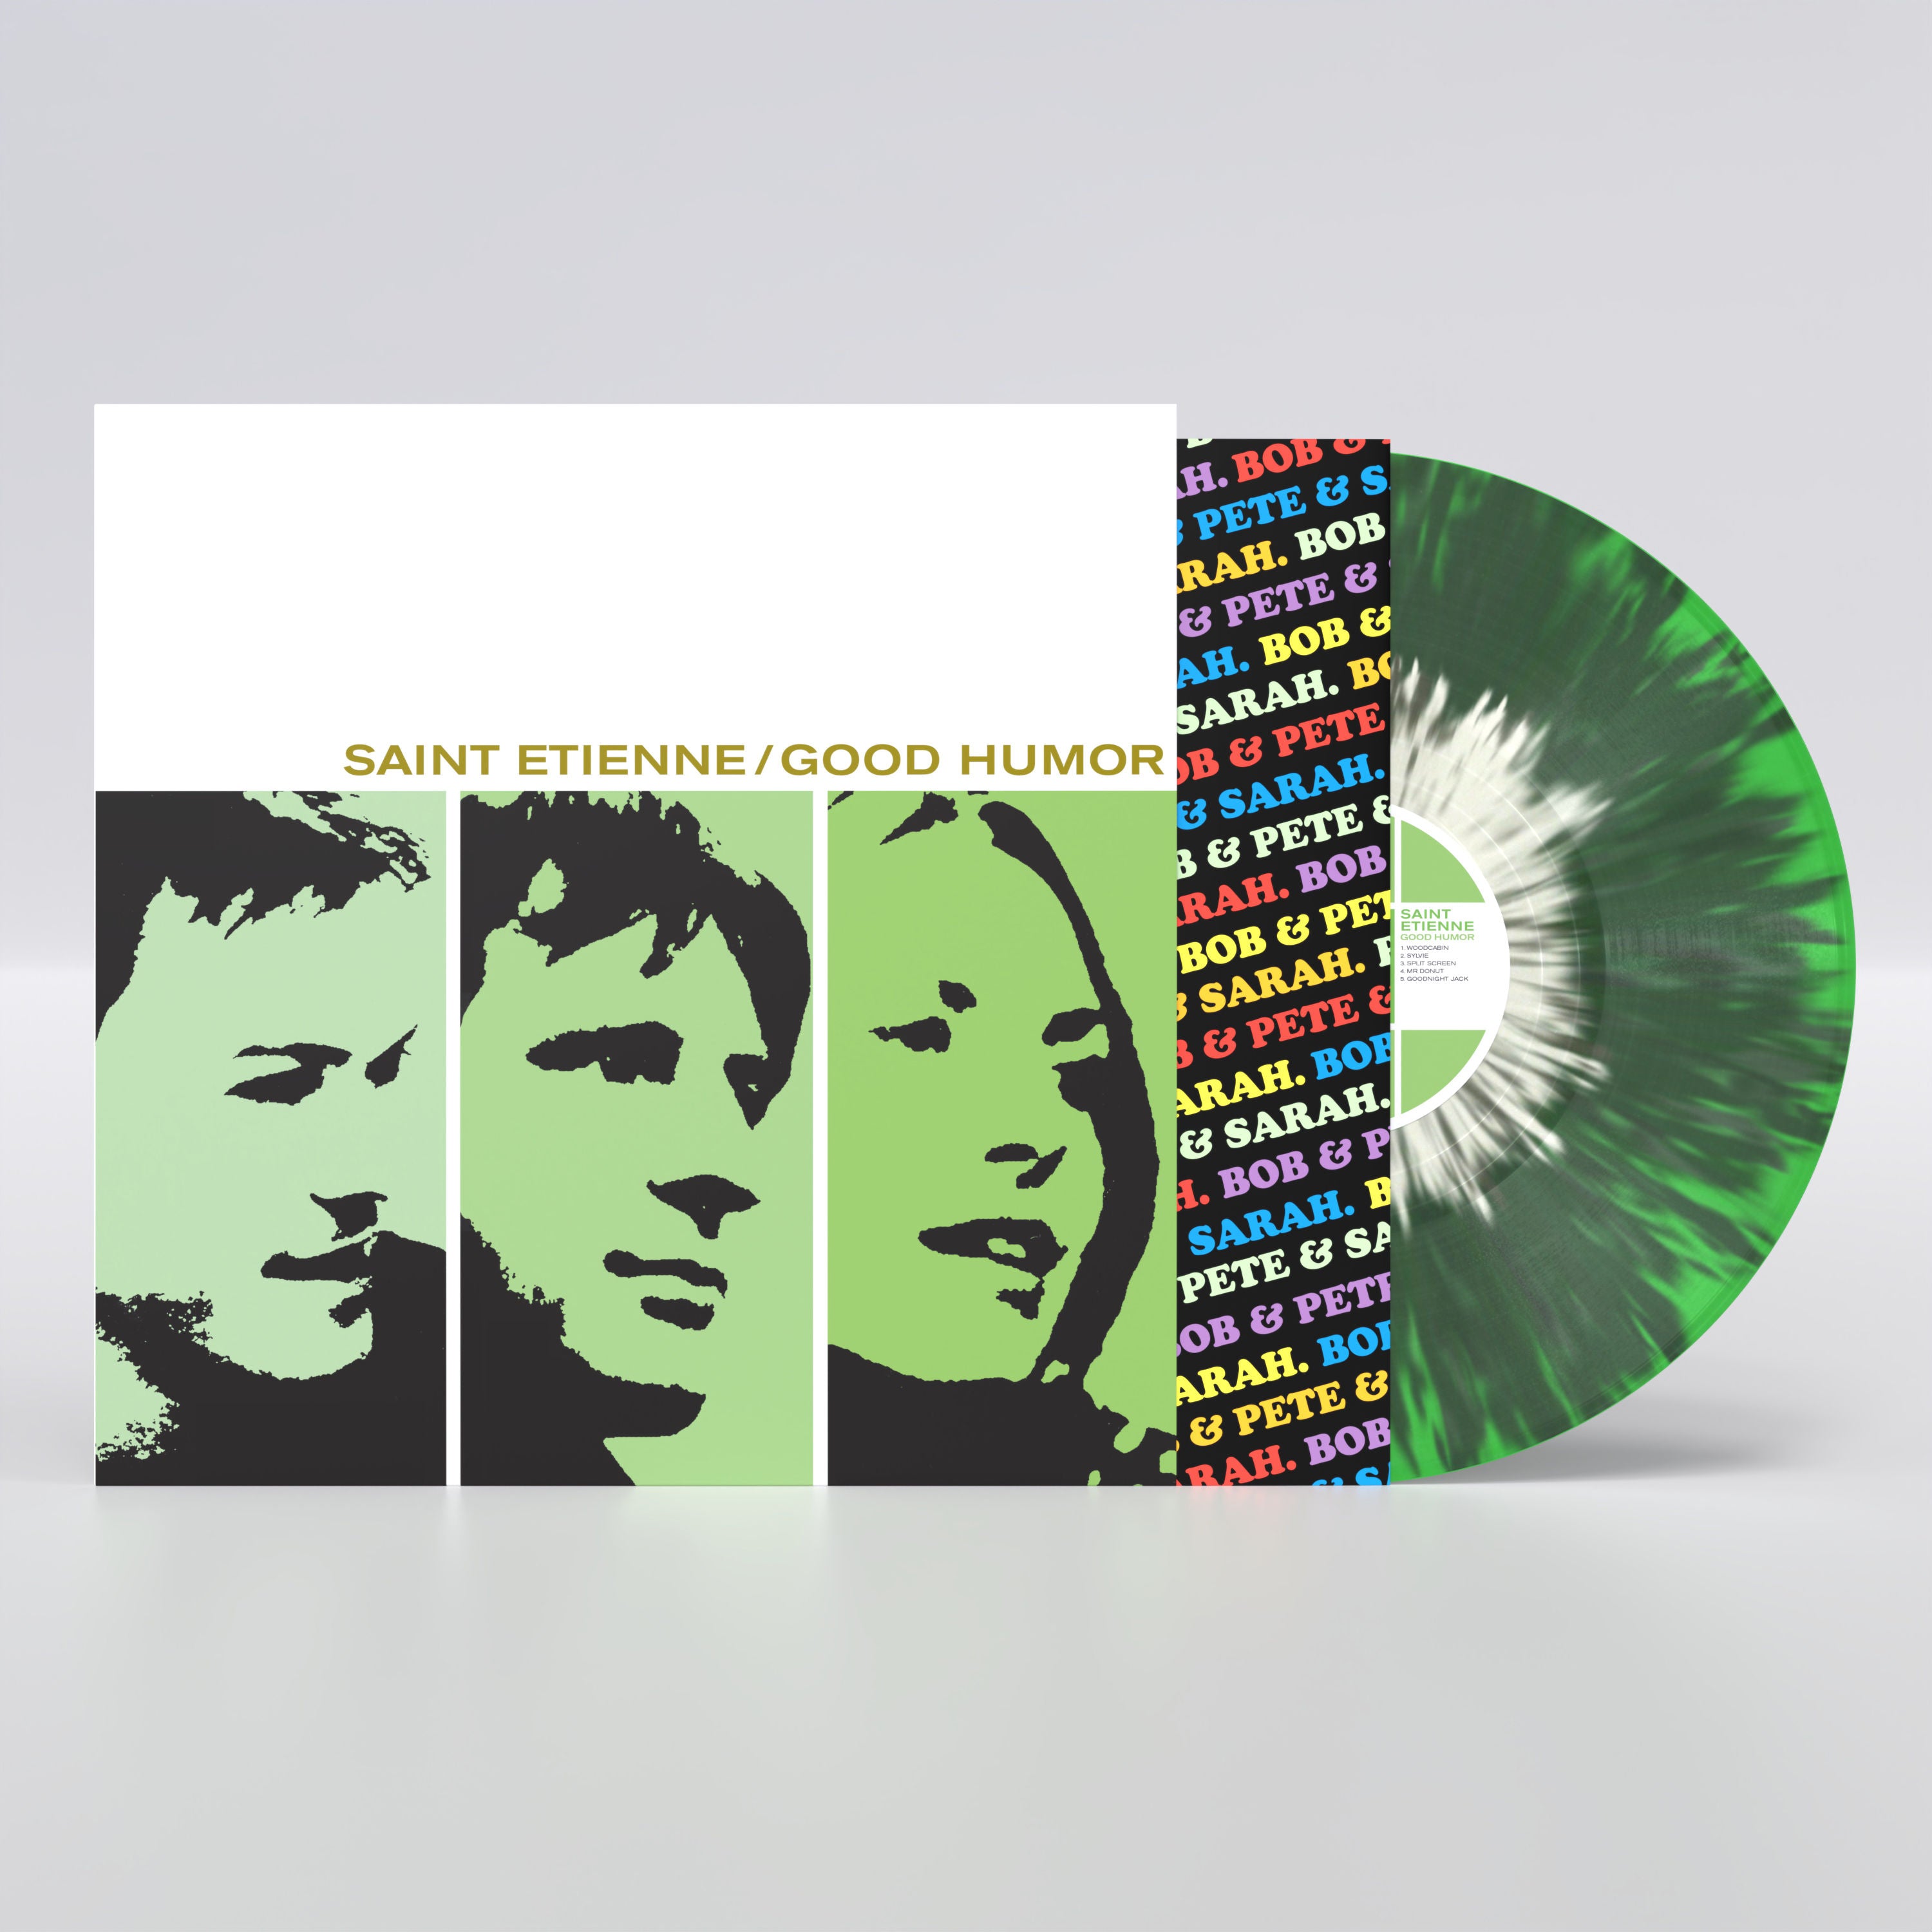 Good Humor (25th Anniversary Edition): Limited Green & White Splatter Vinyl LP